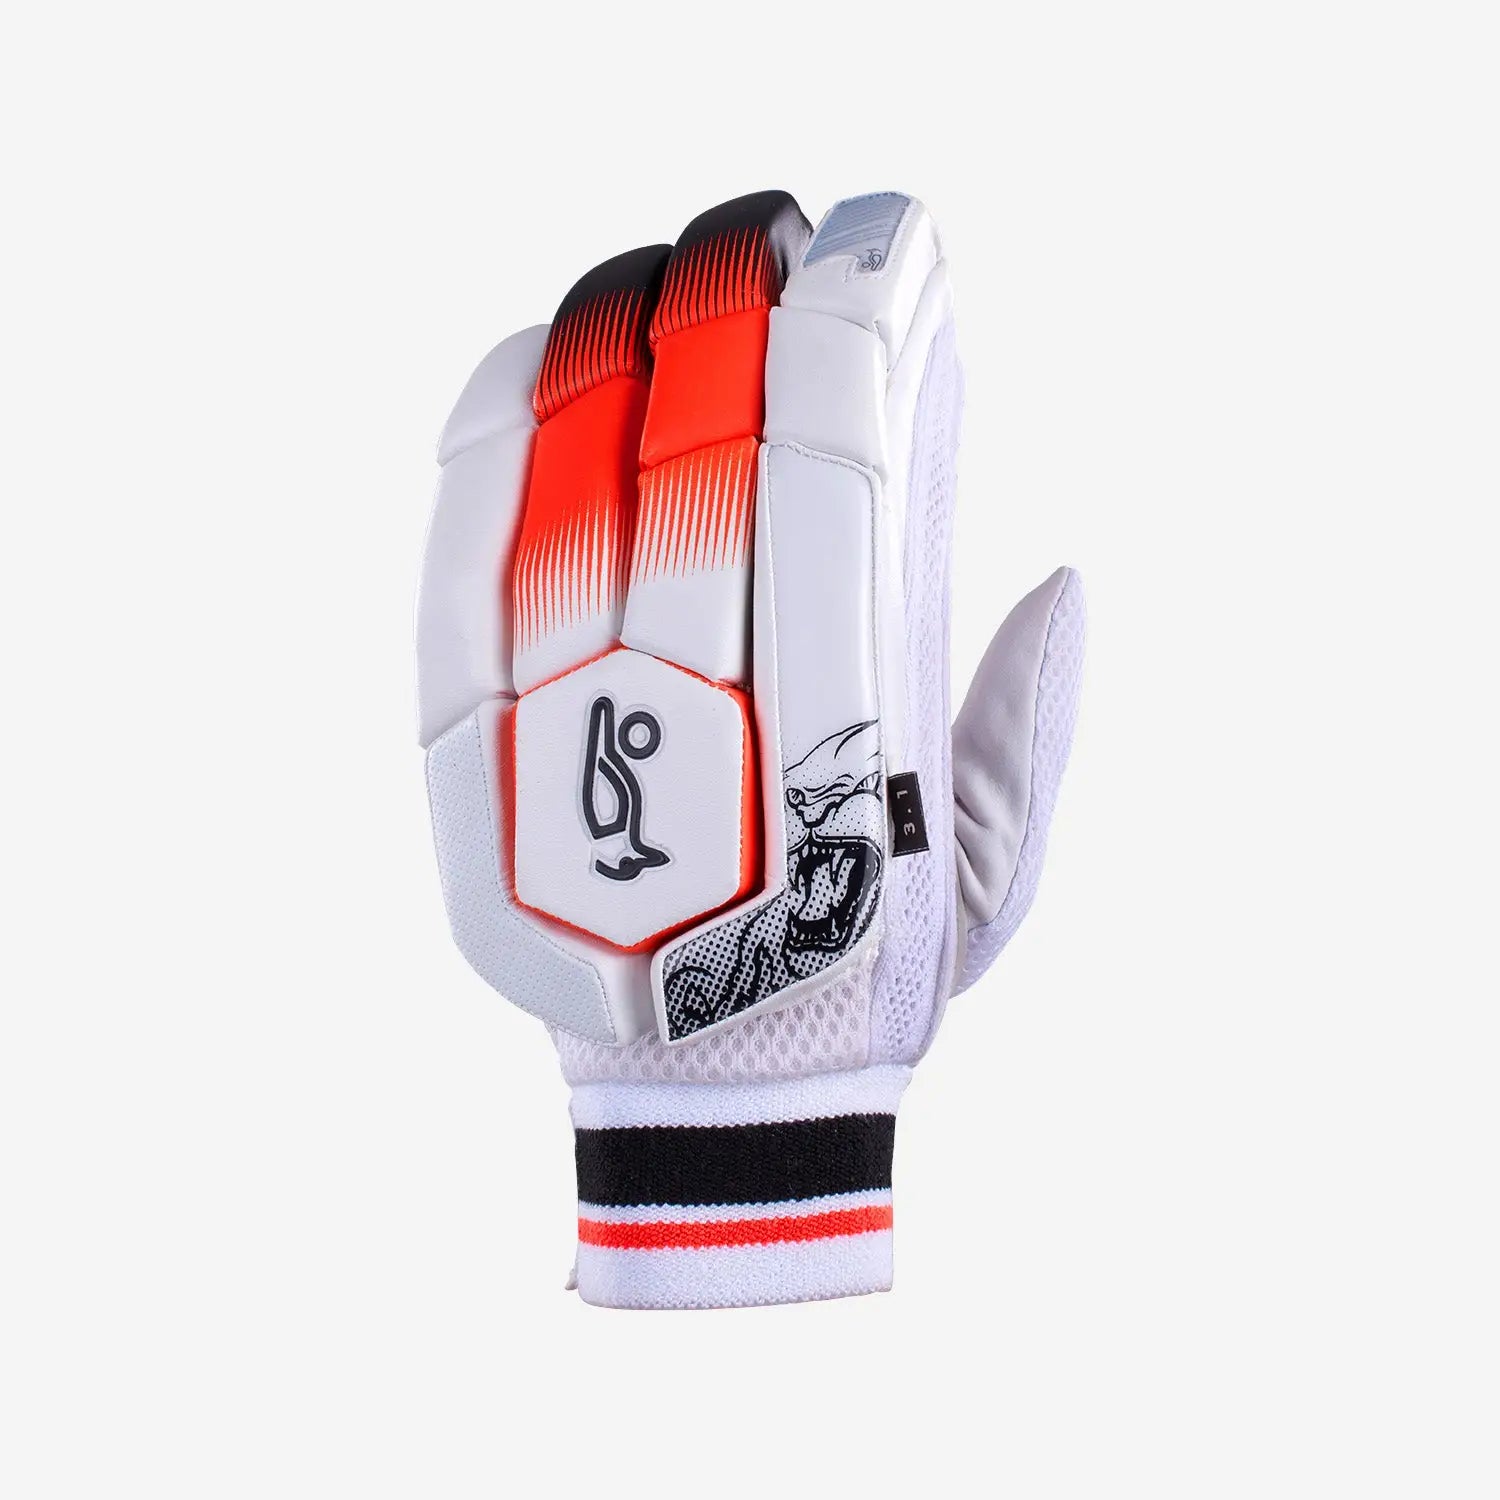 Kookaburra BEAST 3.1 Cricket Batting Gloves Comfort and Protection - GLOVE - BATTING